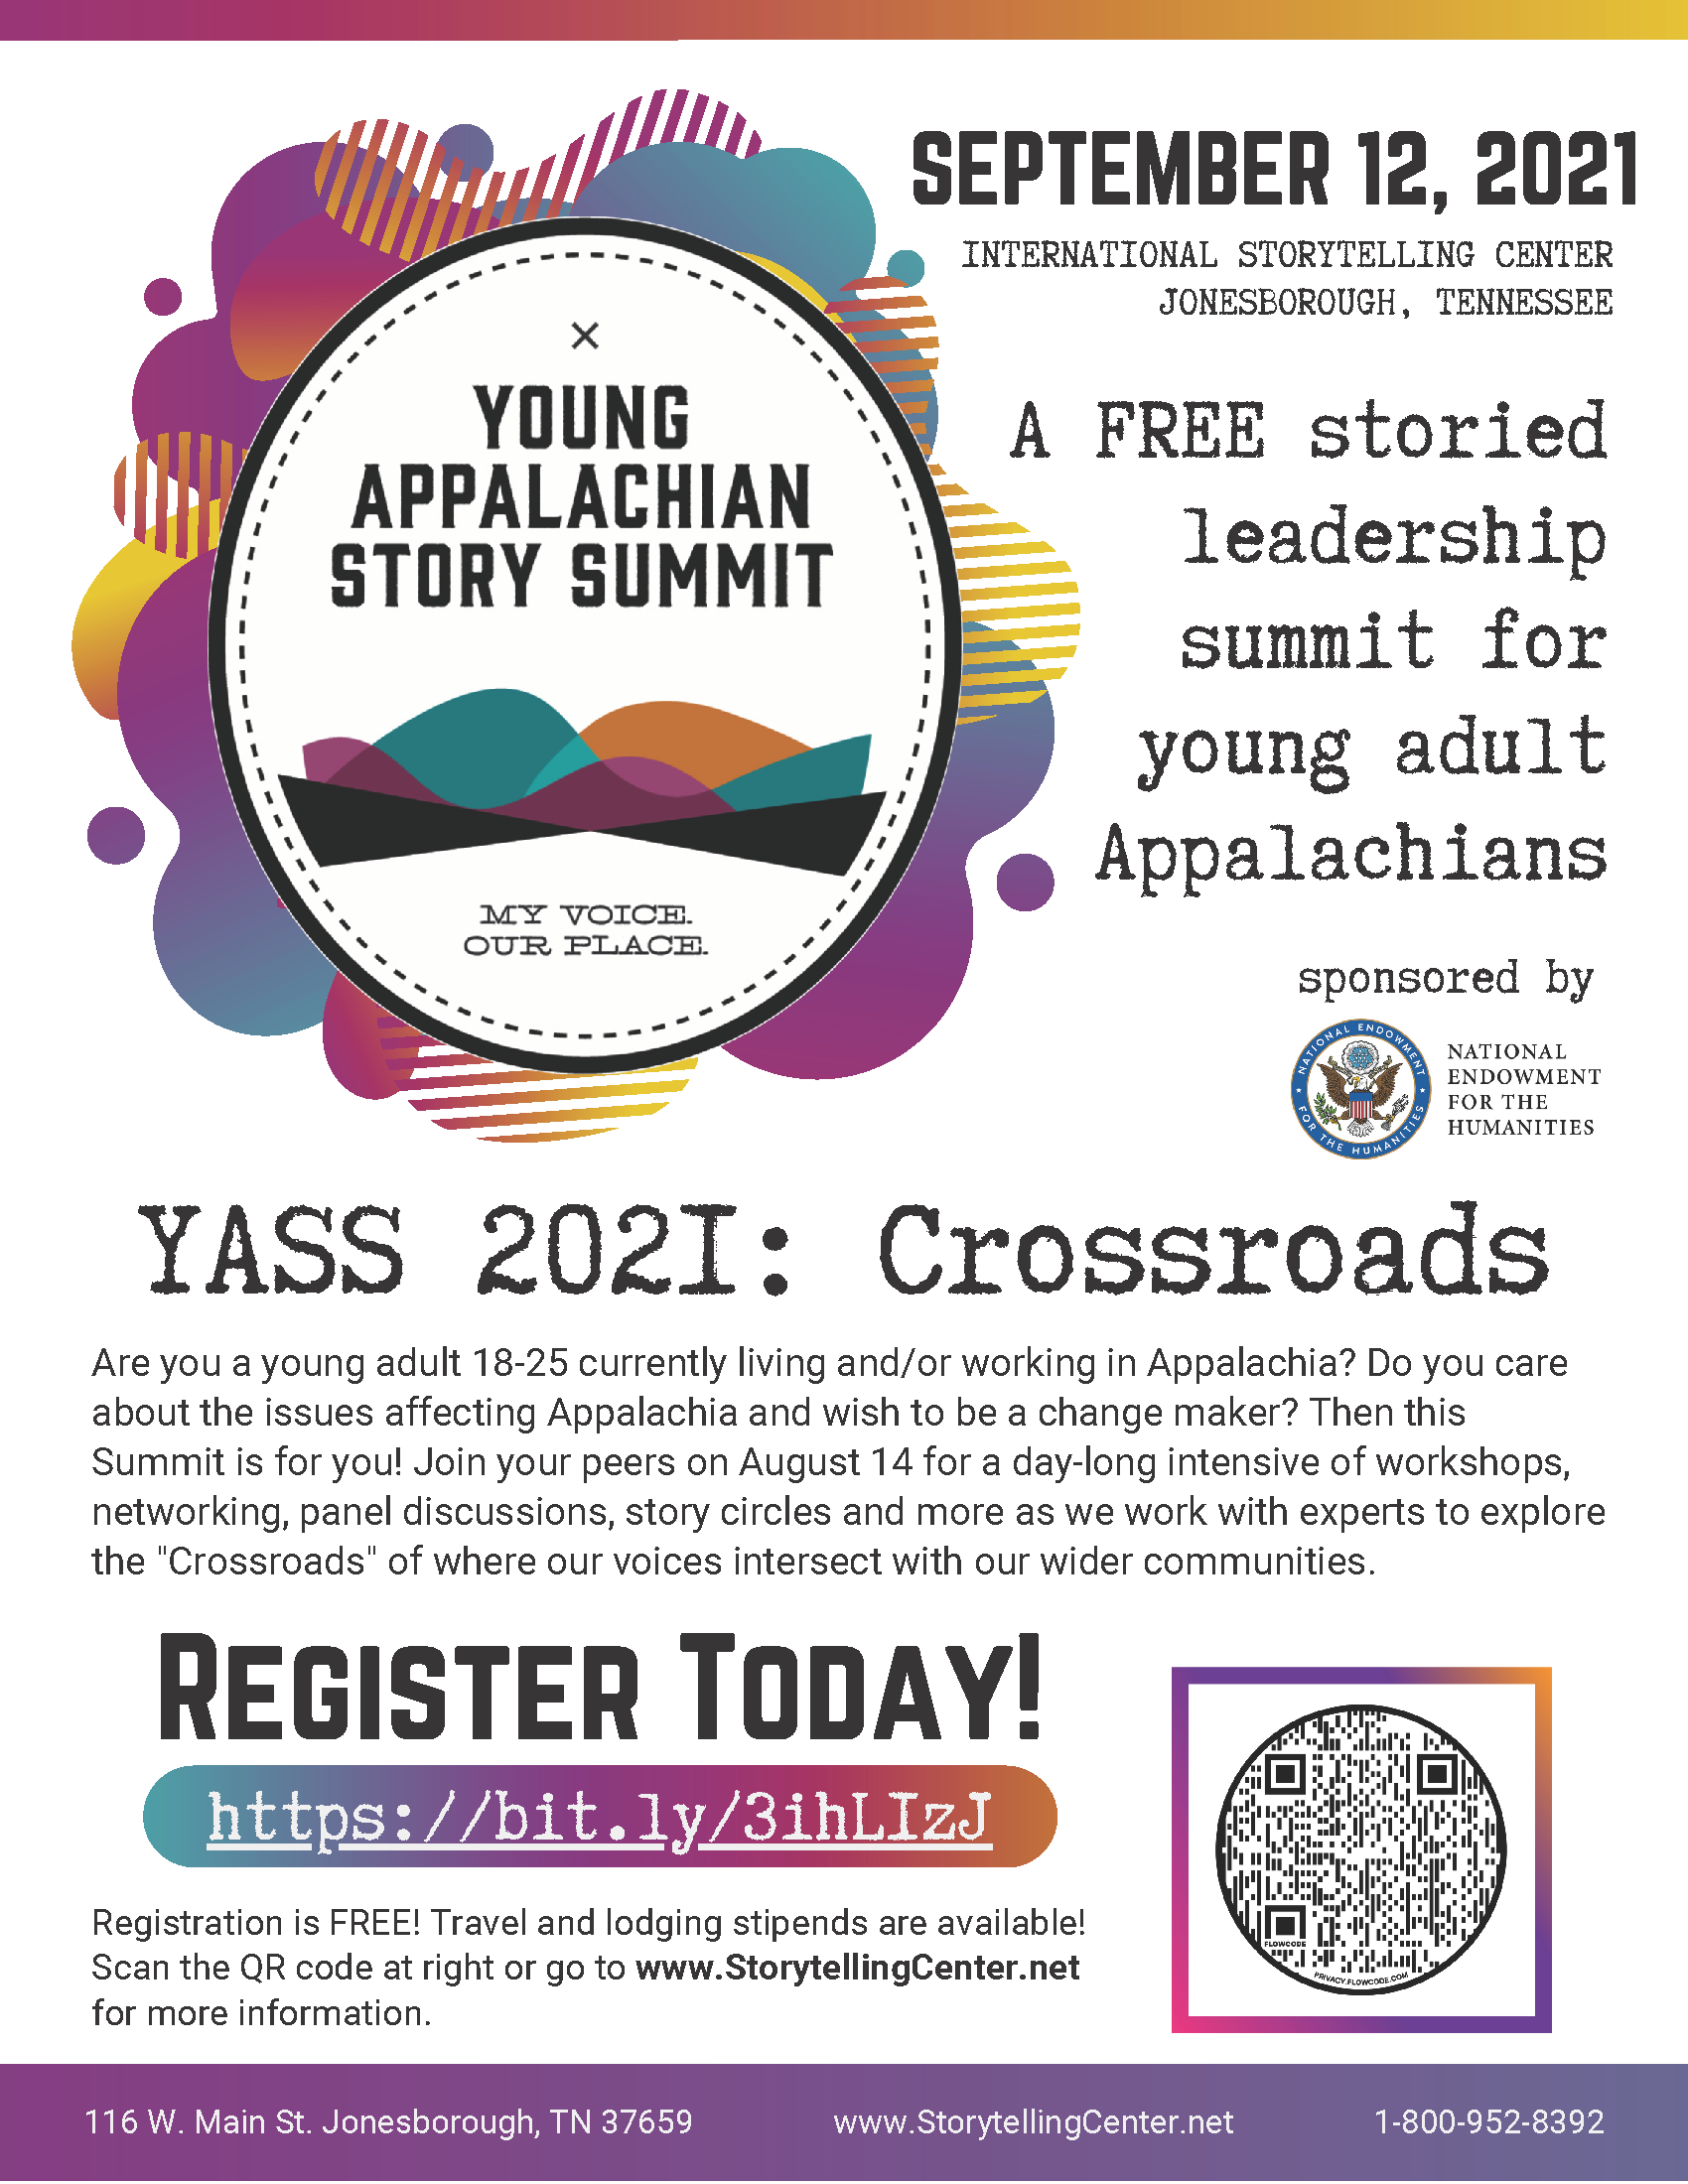 YASS Registration Info